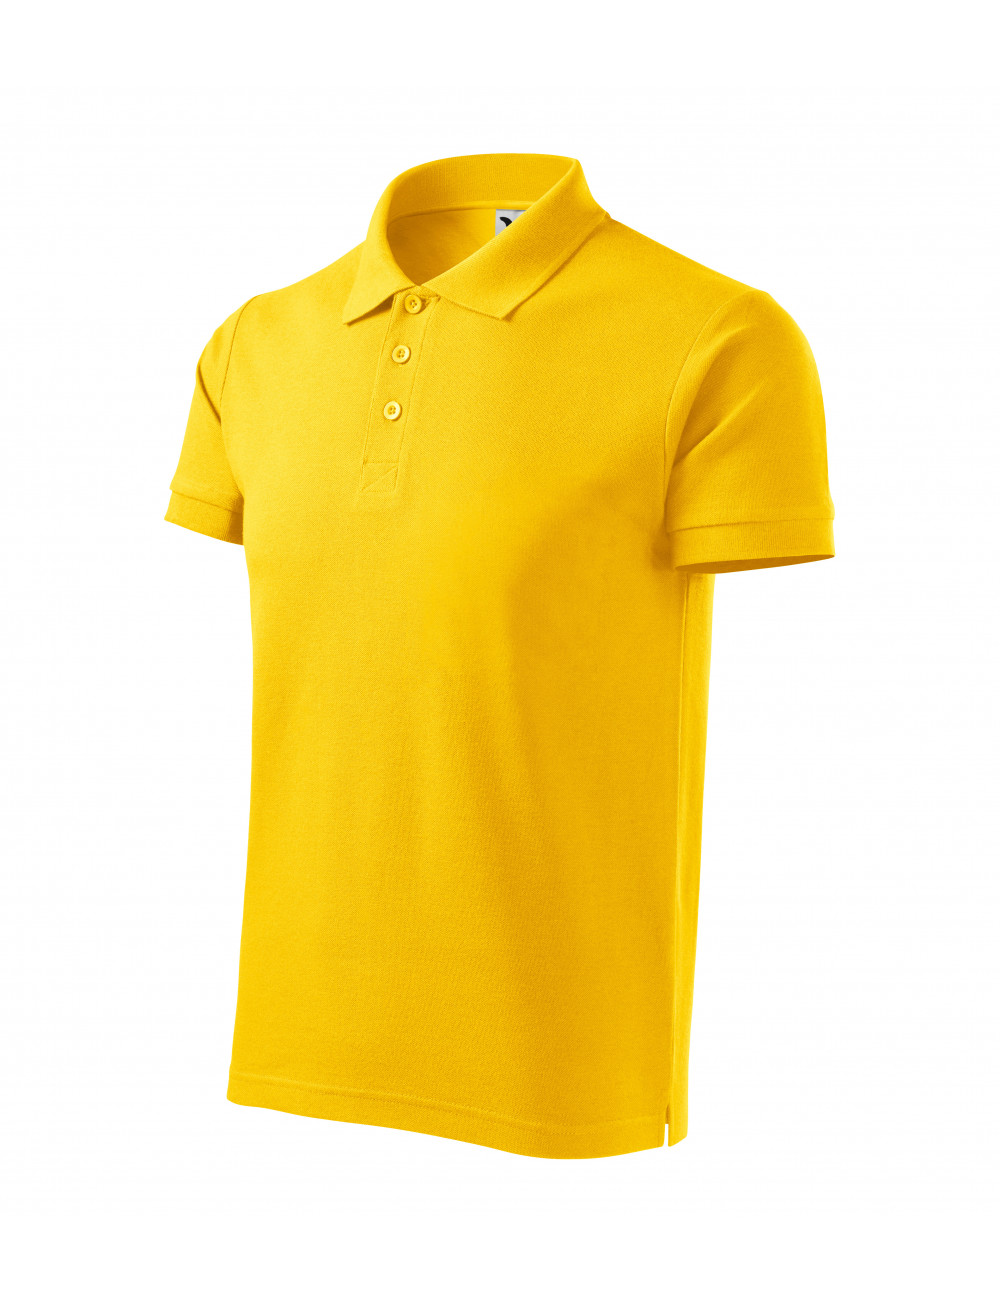 Koszulka polo męska cotton heavy 215 żółty Adler Malfini